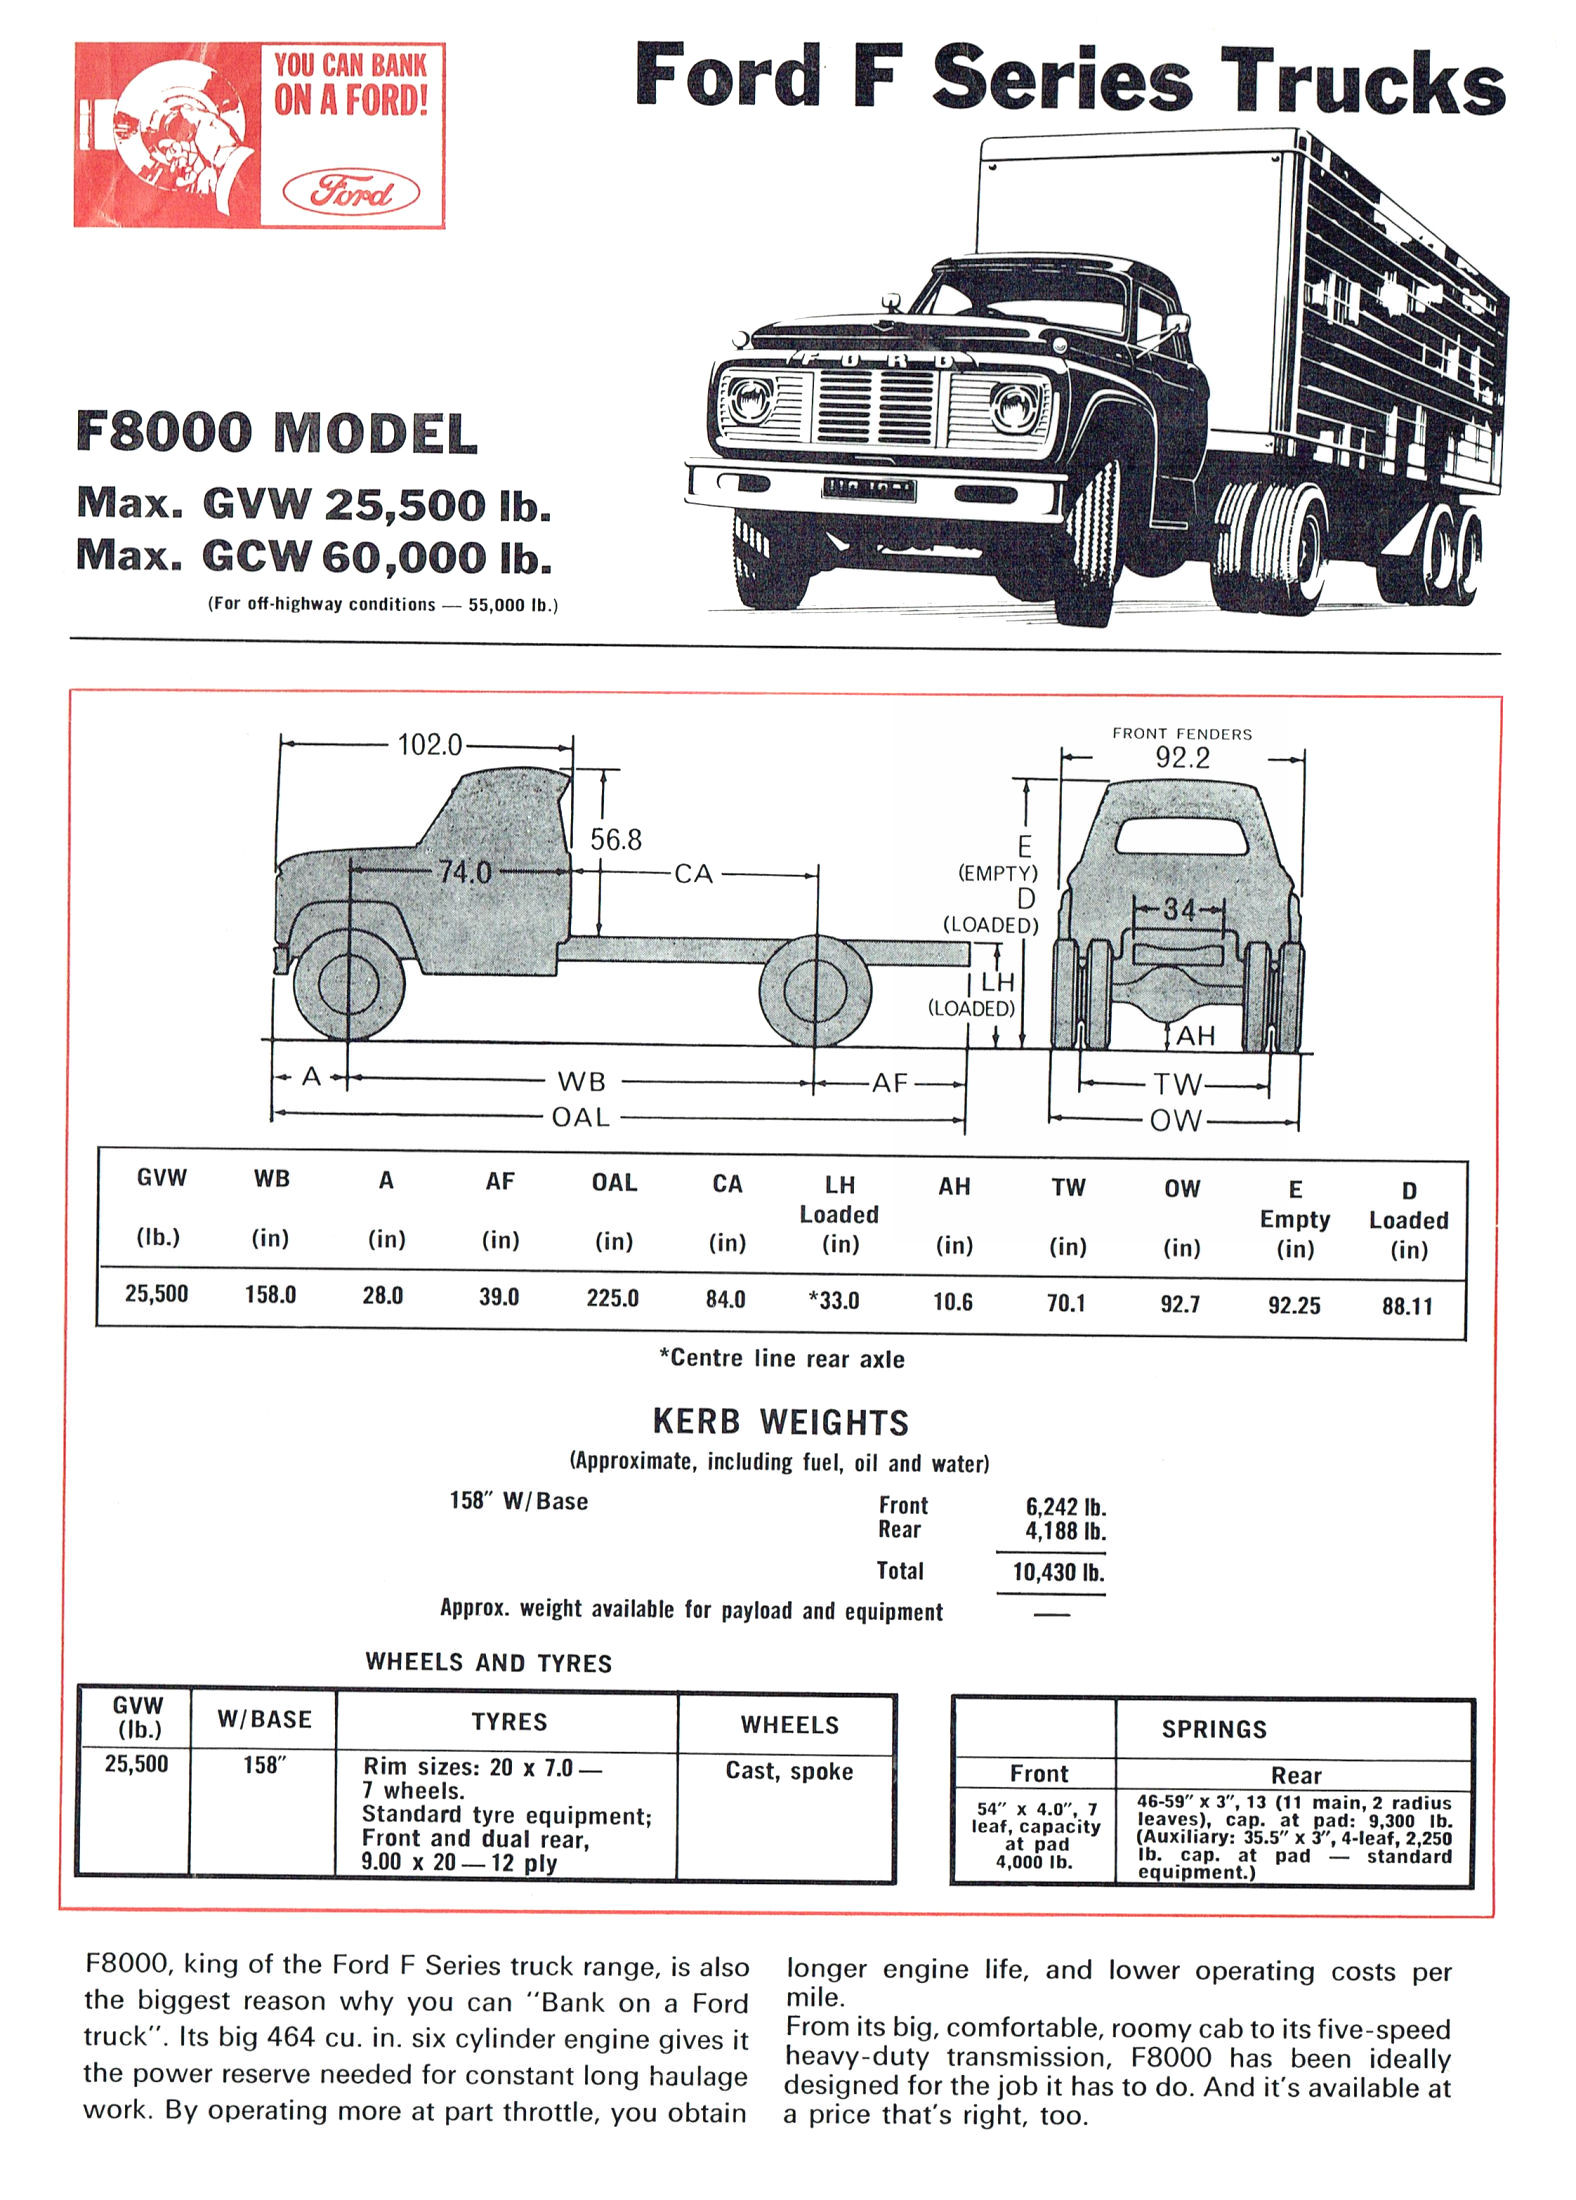 1968 Ford Trucks (Aus)-iF80Ra.jpg-2022-12-7 13.27.17